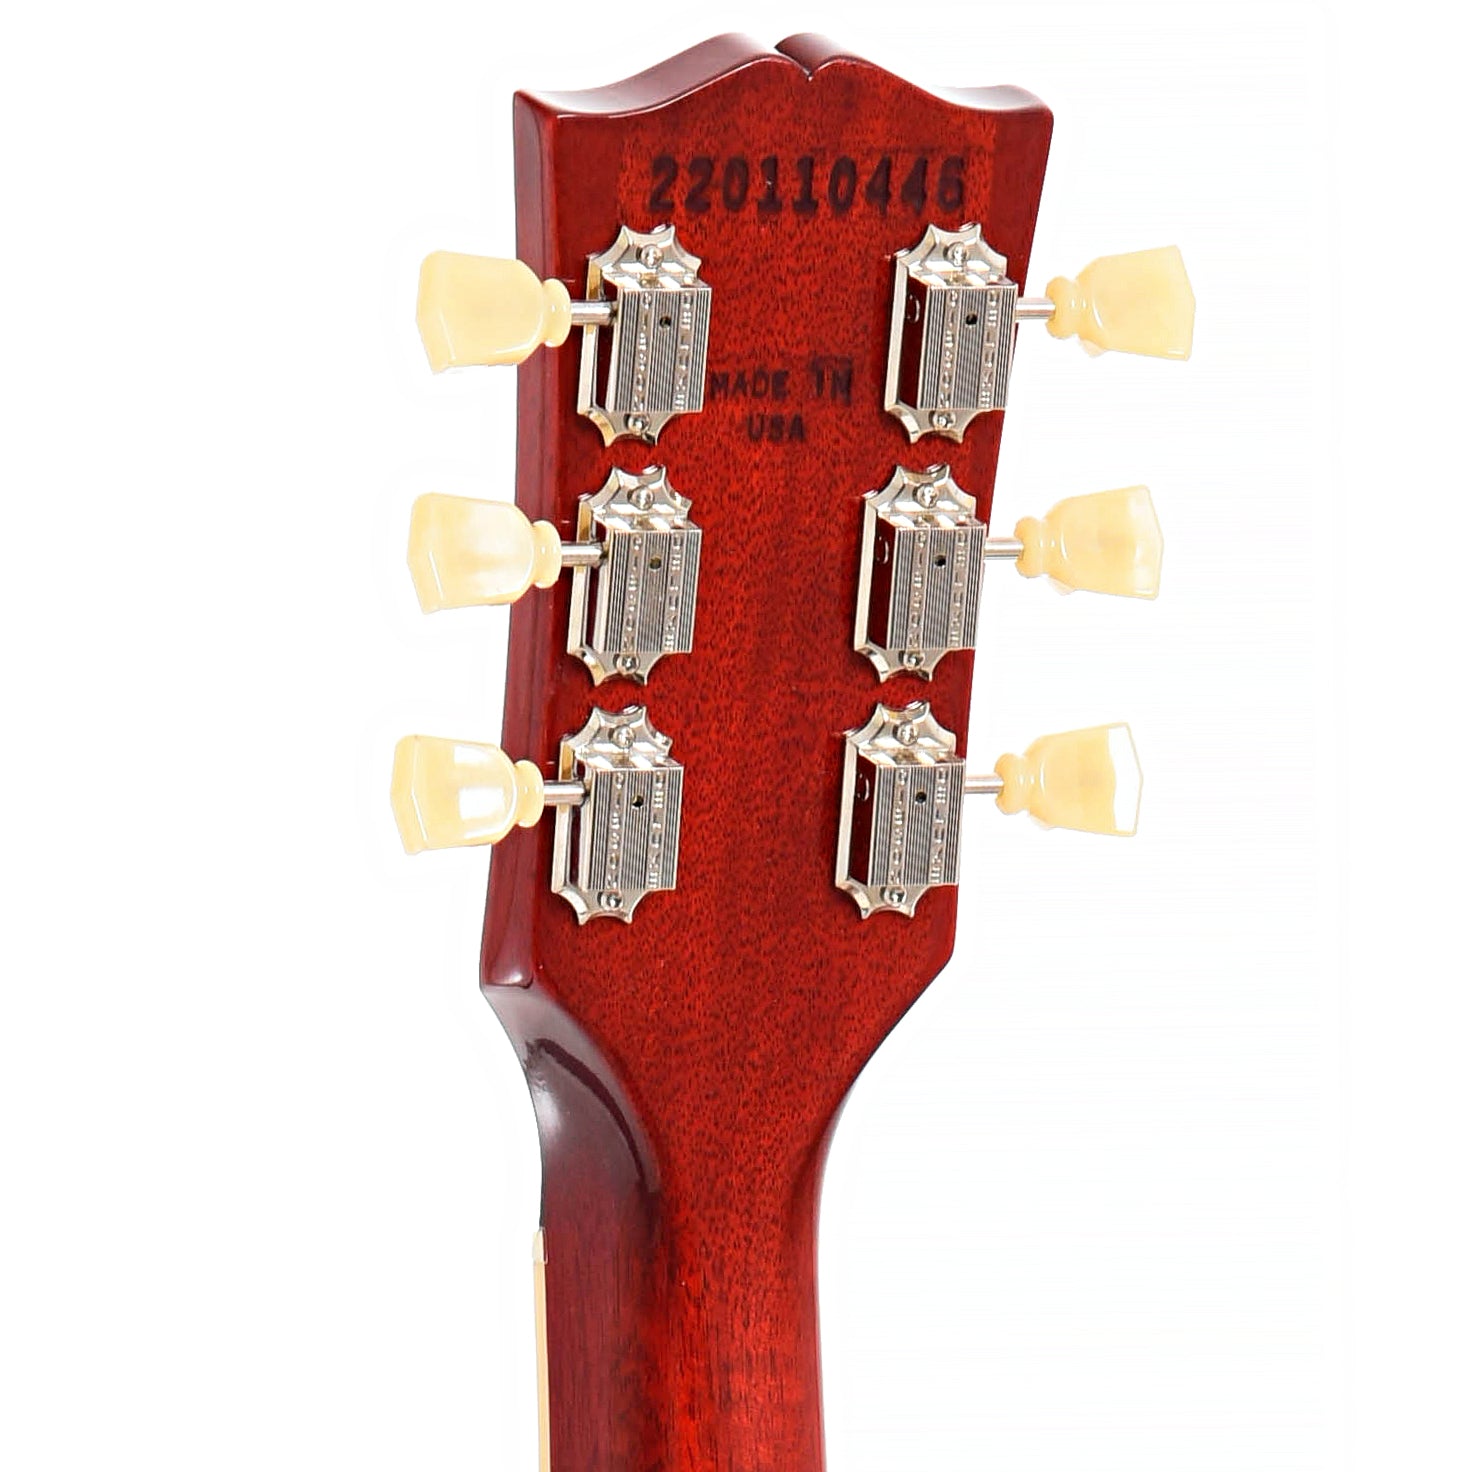 Back headstock of Gibson Les Paul Standard 